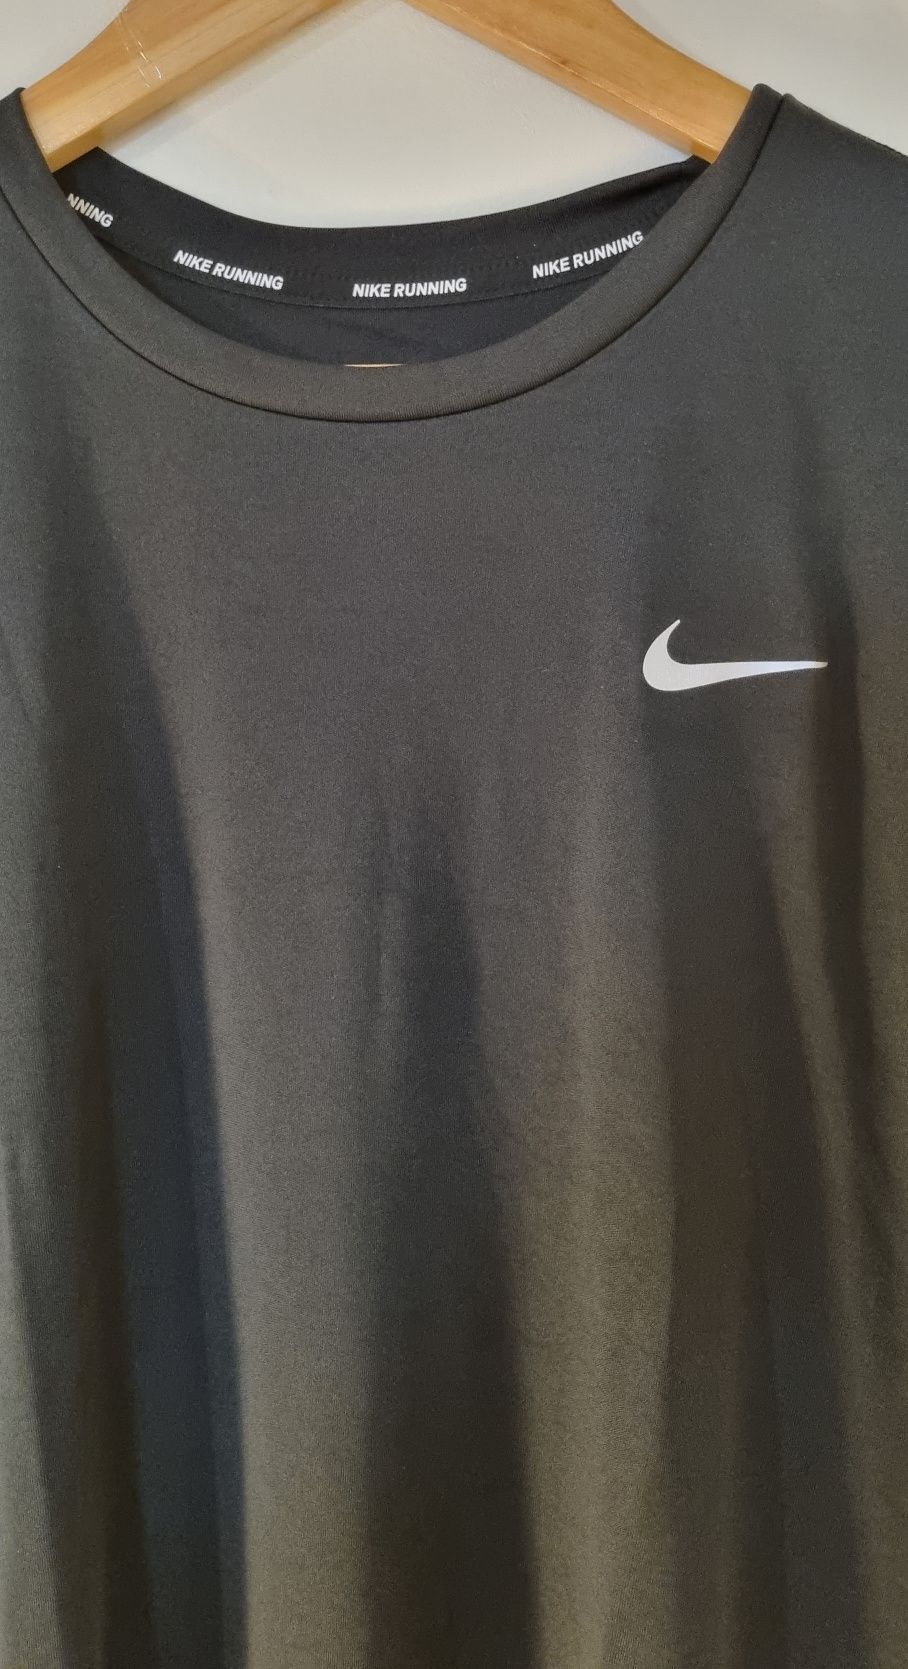 Tricou Nike Running Dama Marime : L